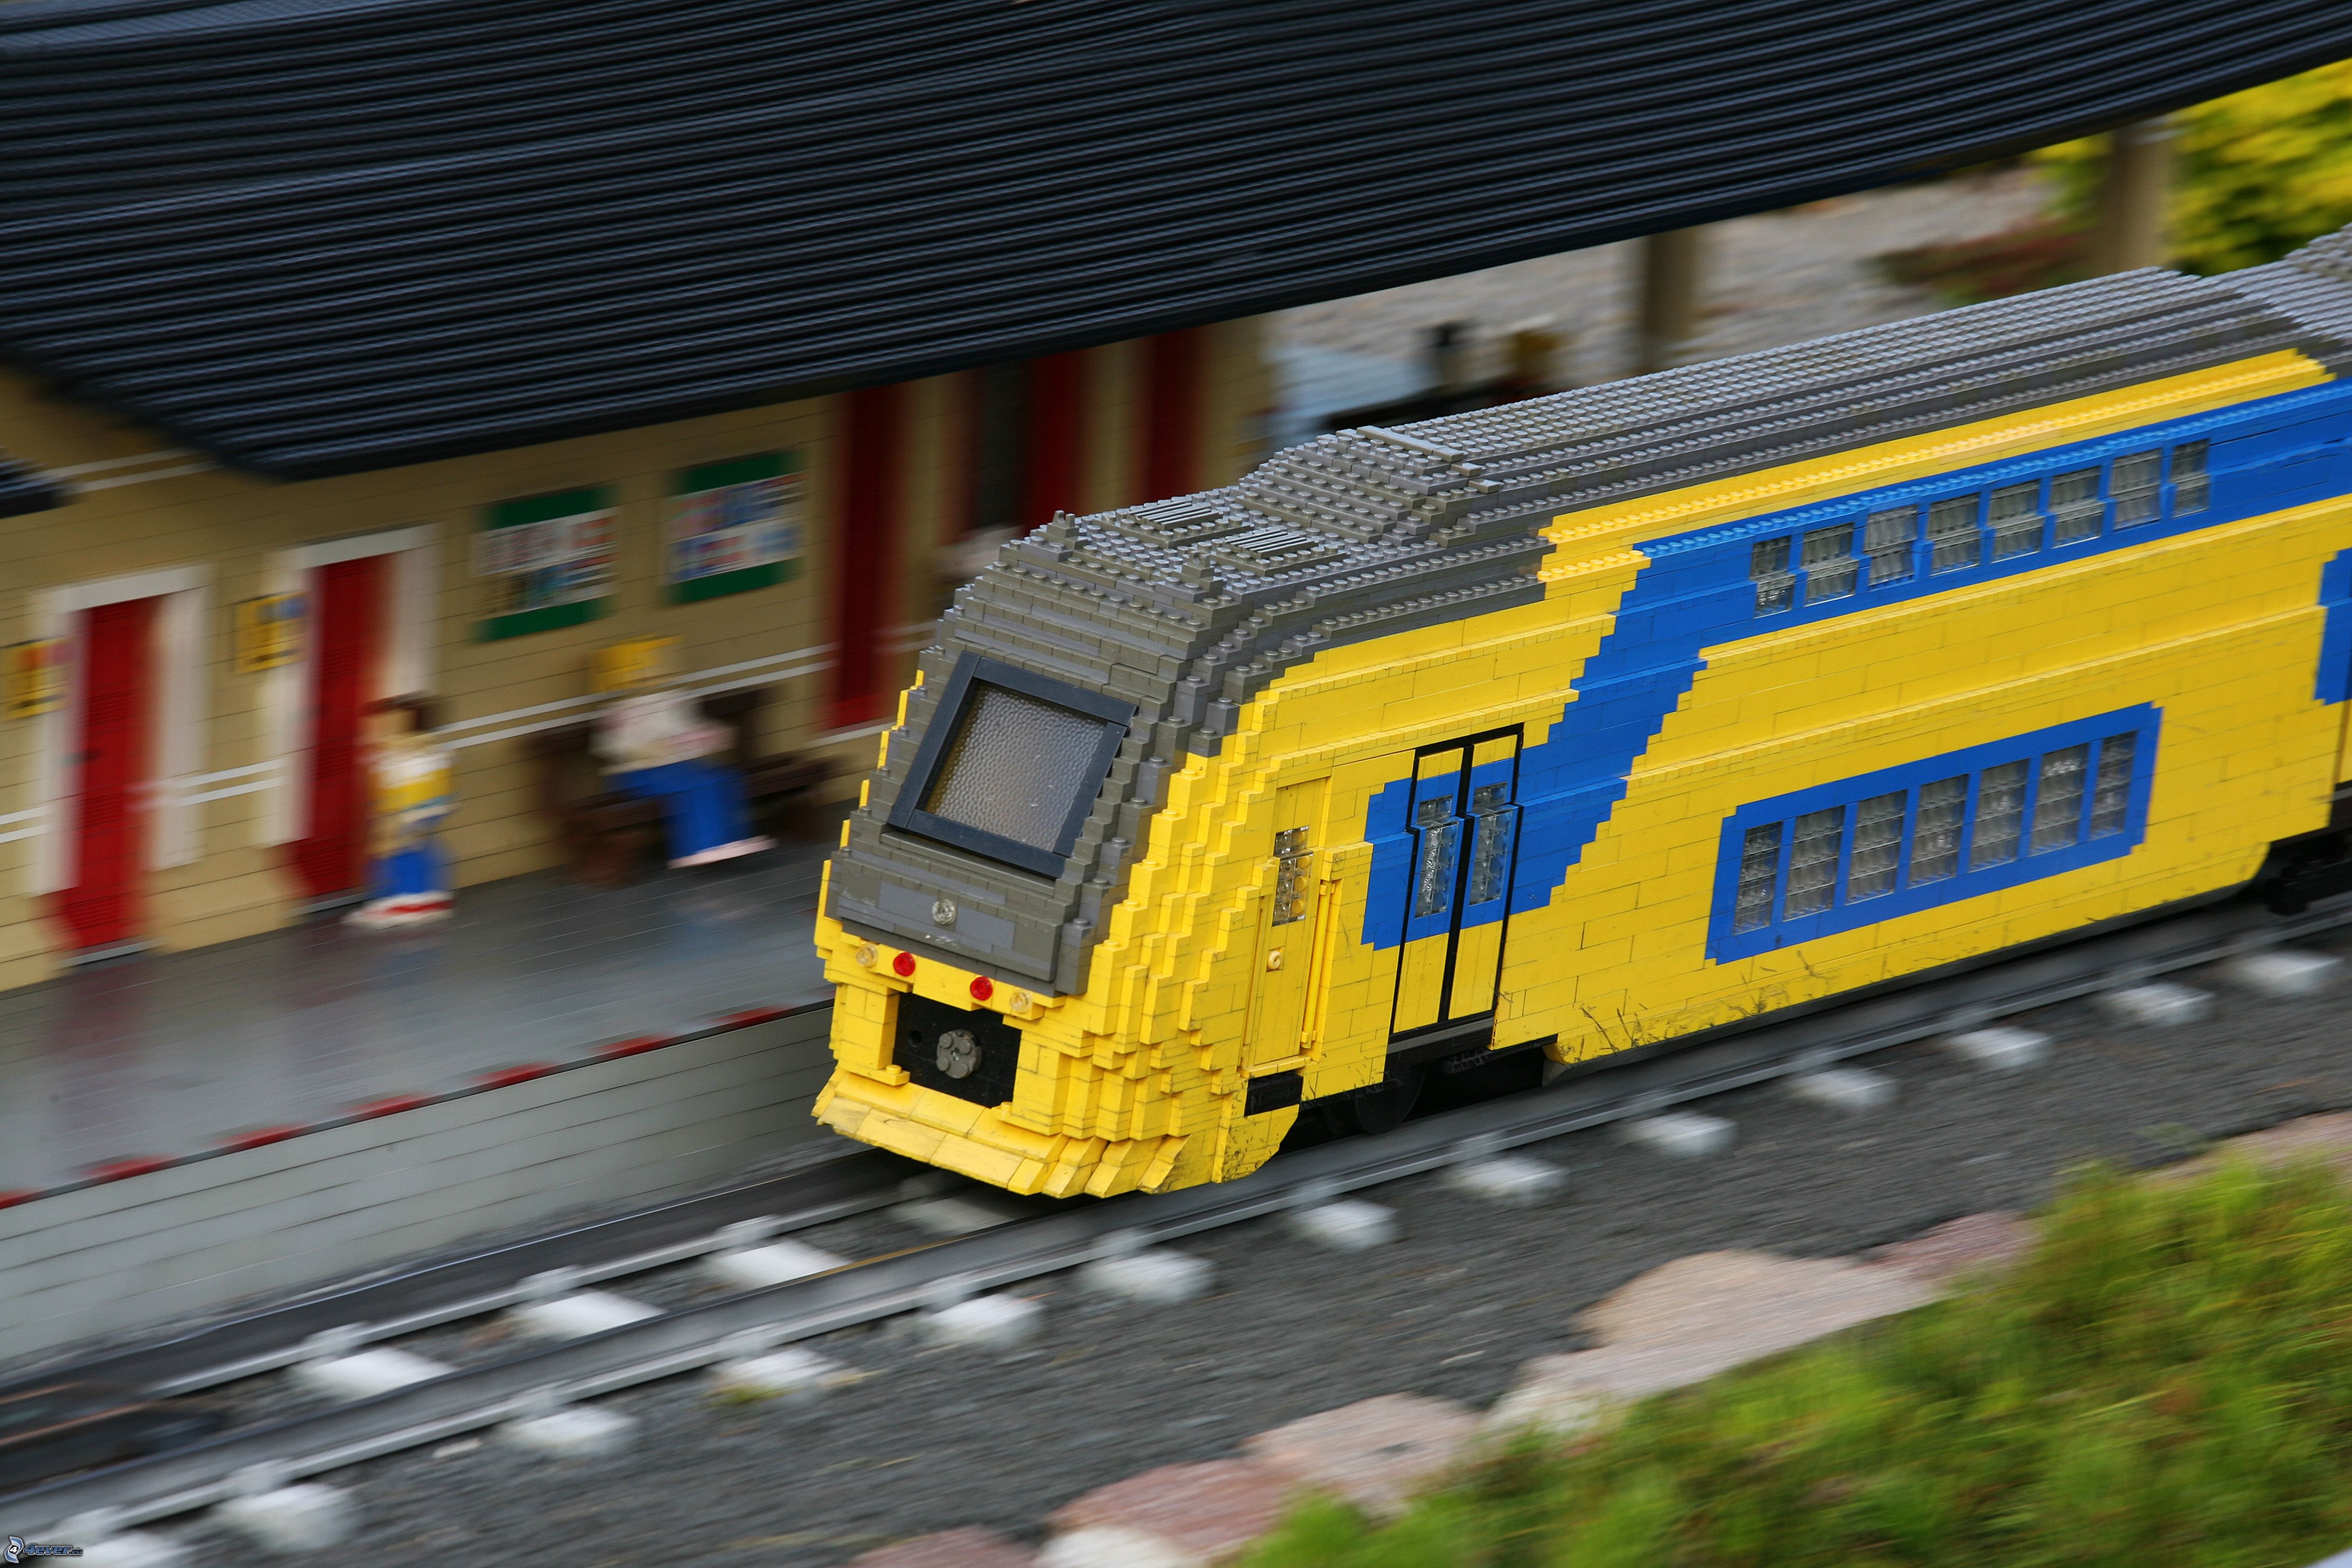 lego yellow train station